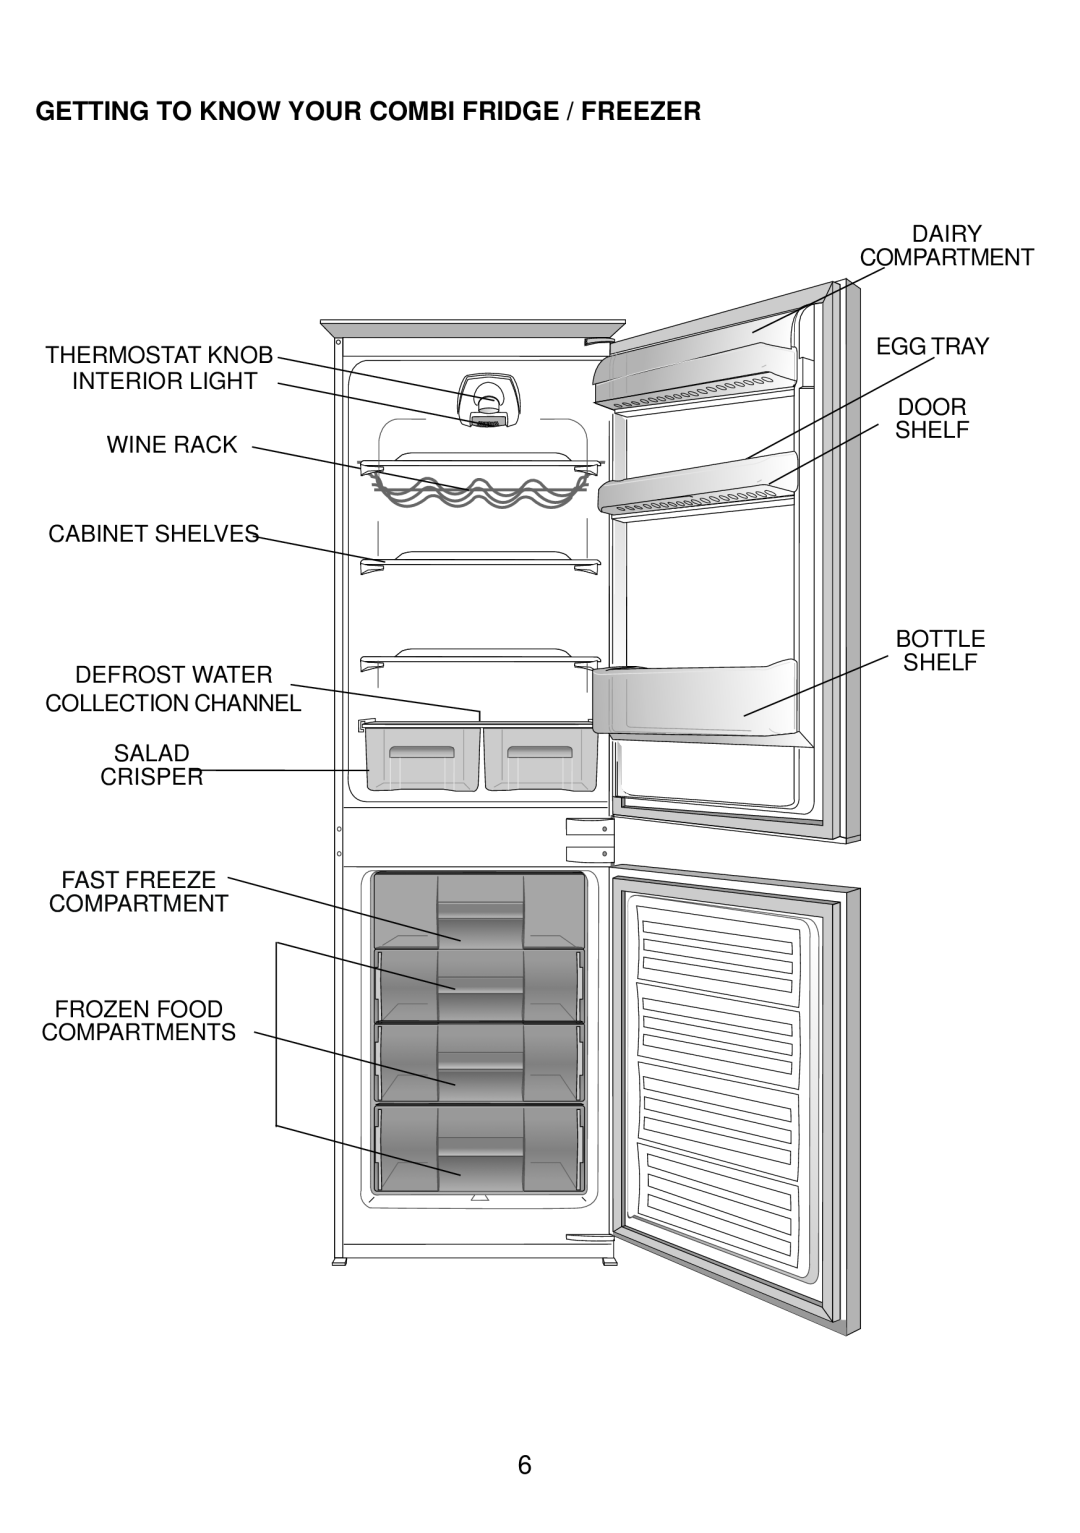 Glen Dimplex Home Appliances Ltd IFF5050 Getting To Know Your Combi Fridge / Freezer, Compartment Frozen Food Compartments 